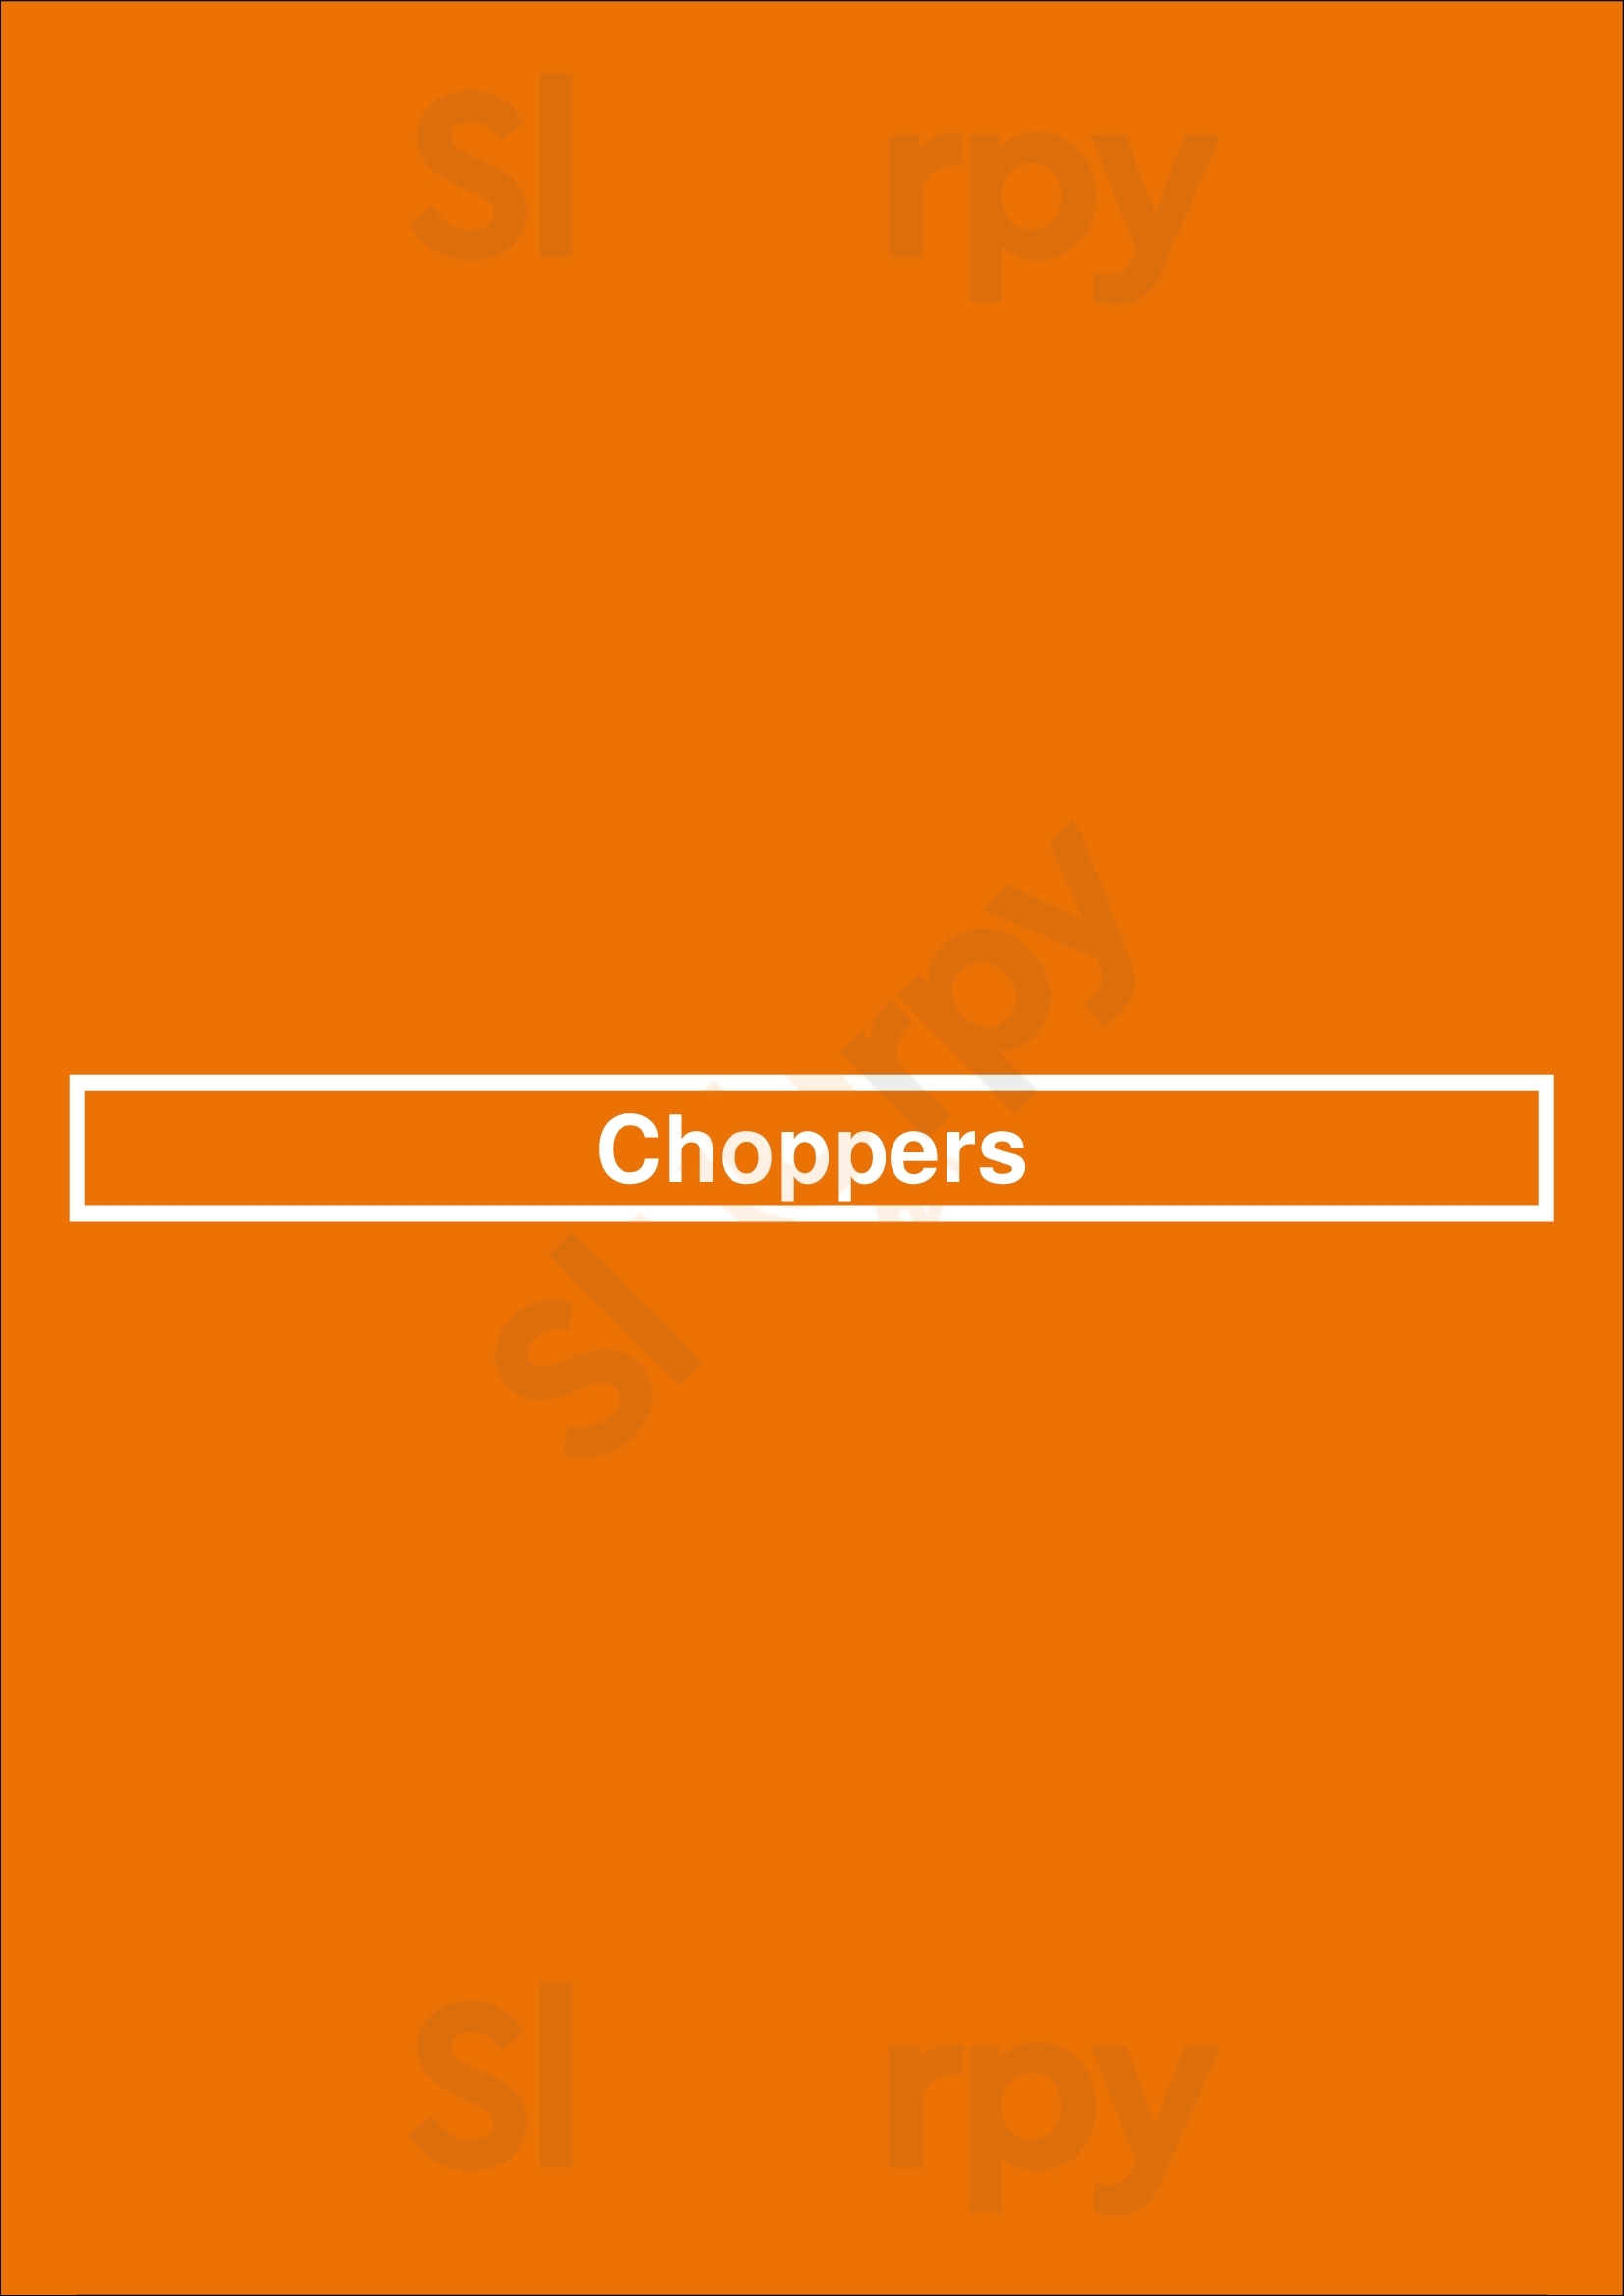 Choppers Chicago Menu - 1